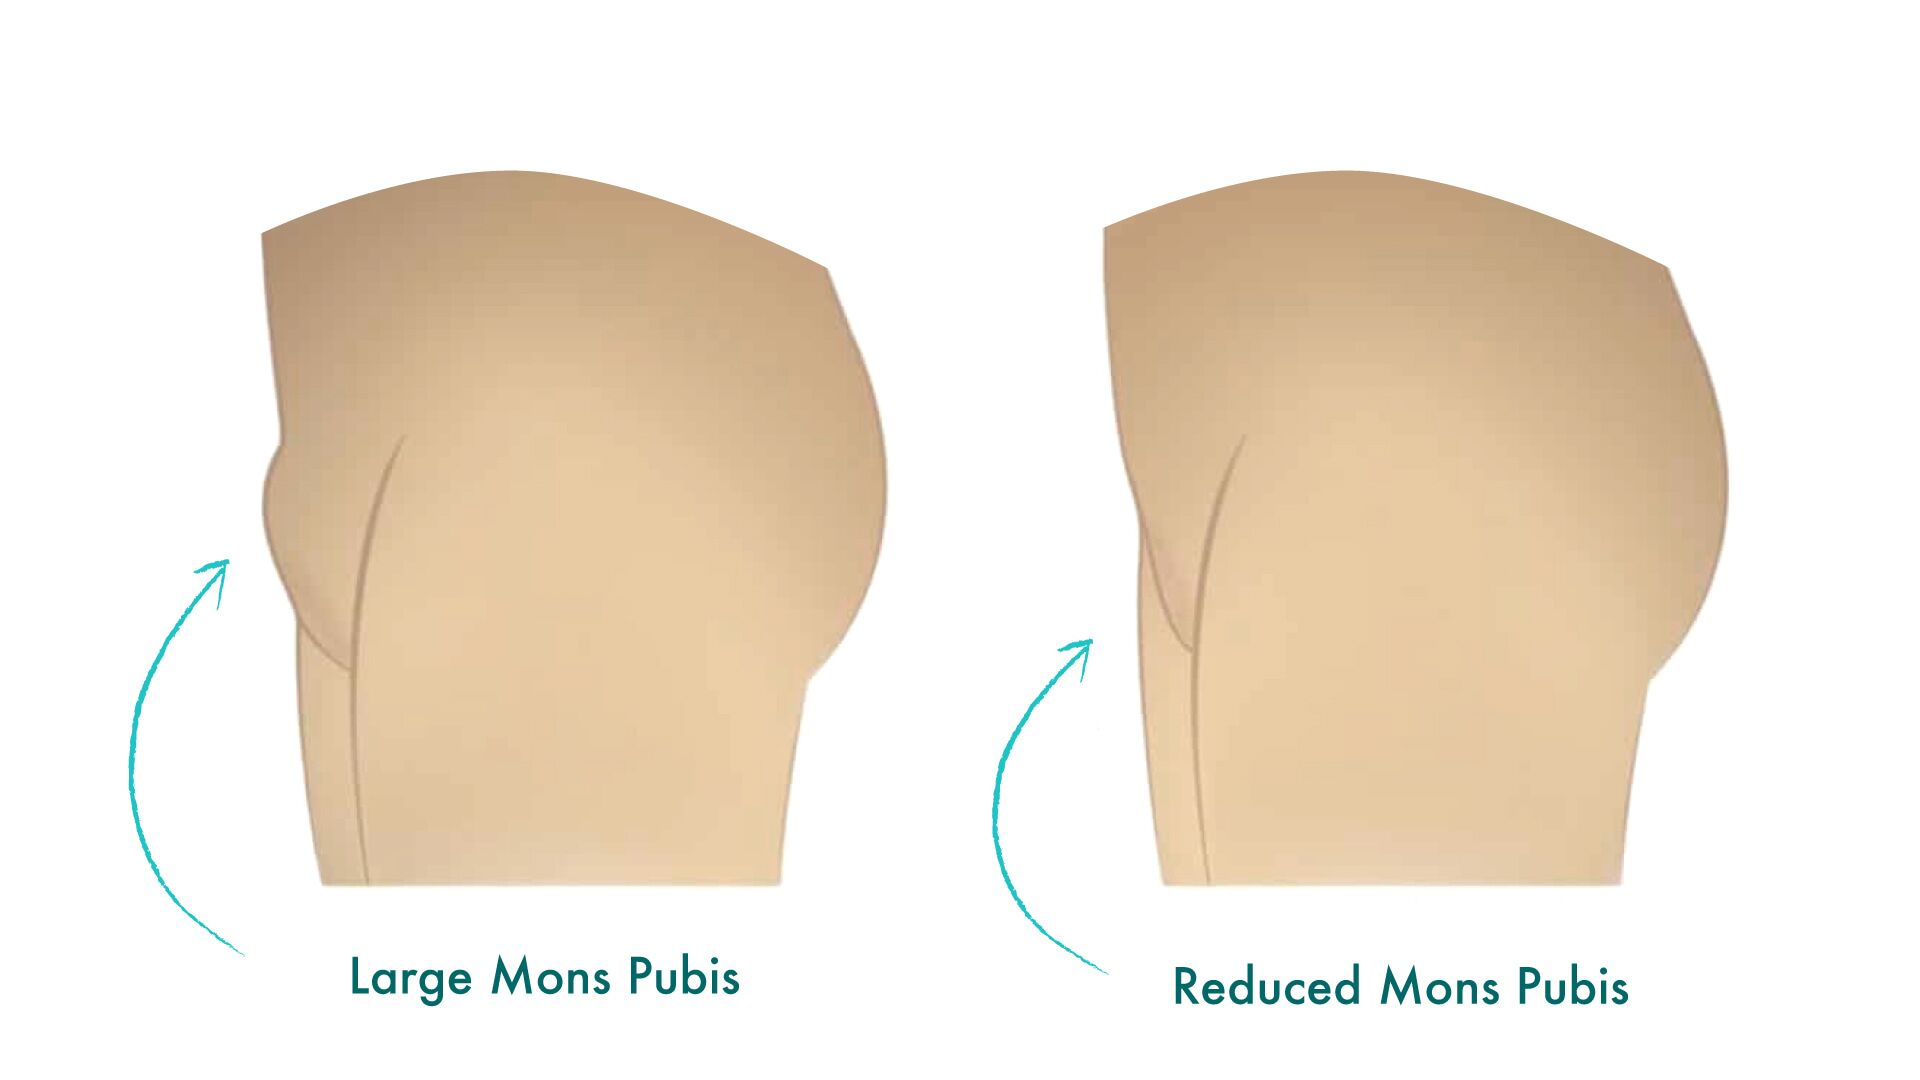 Monsplasty (Mons Pubis Liposuction) in Toronto